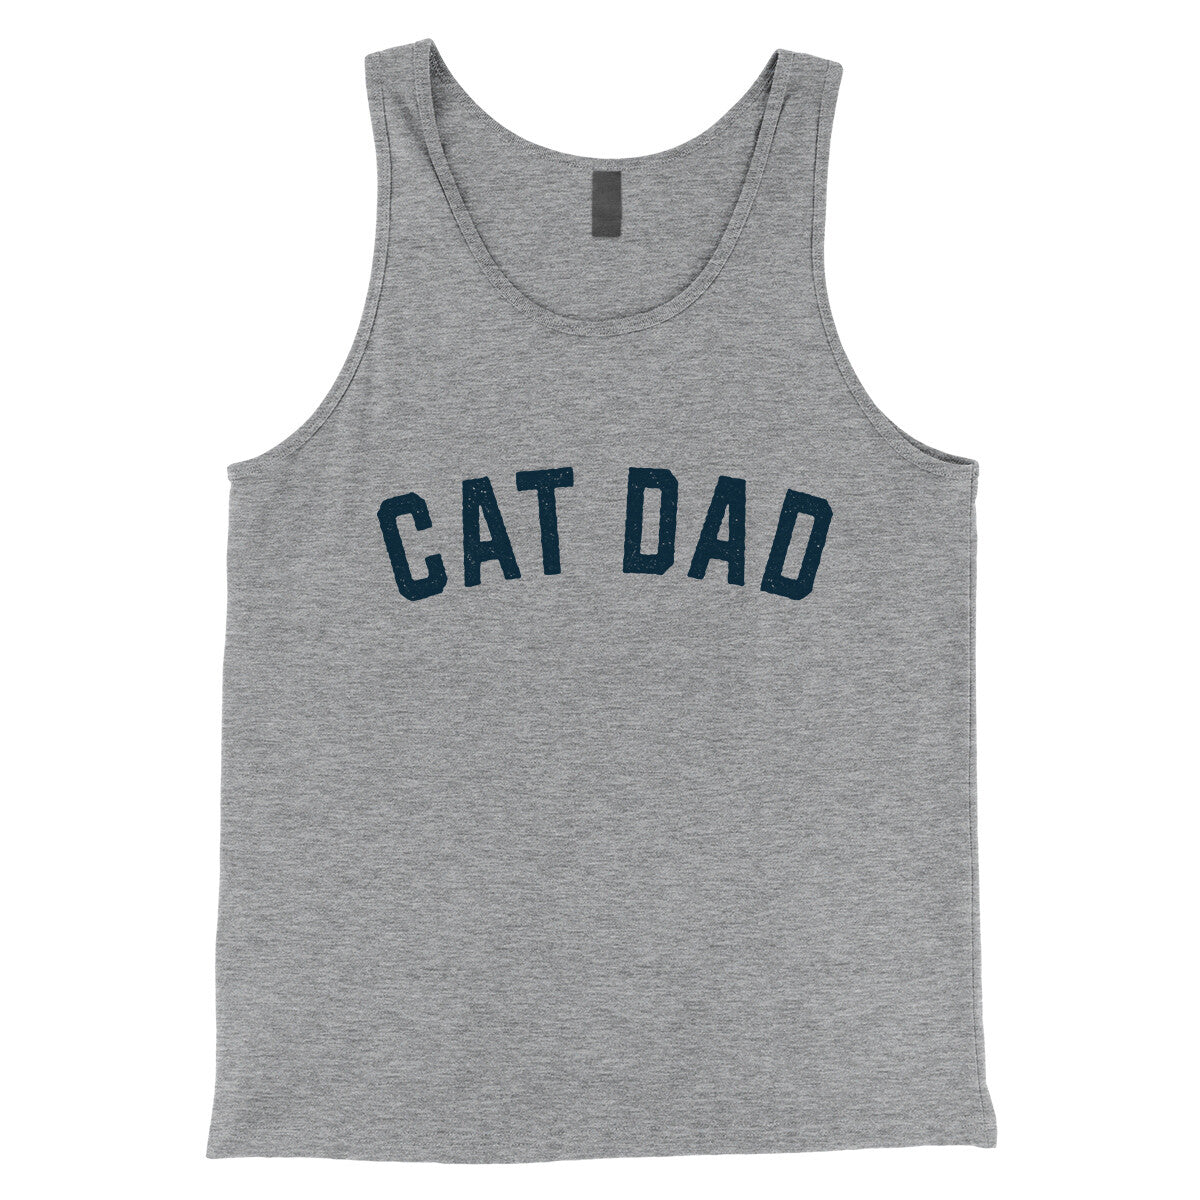 Cat Dad in Athletic Heather Color